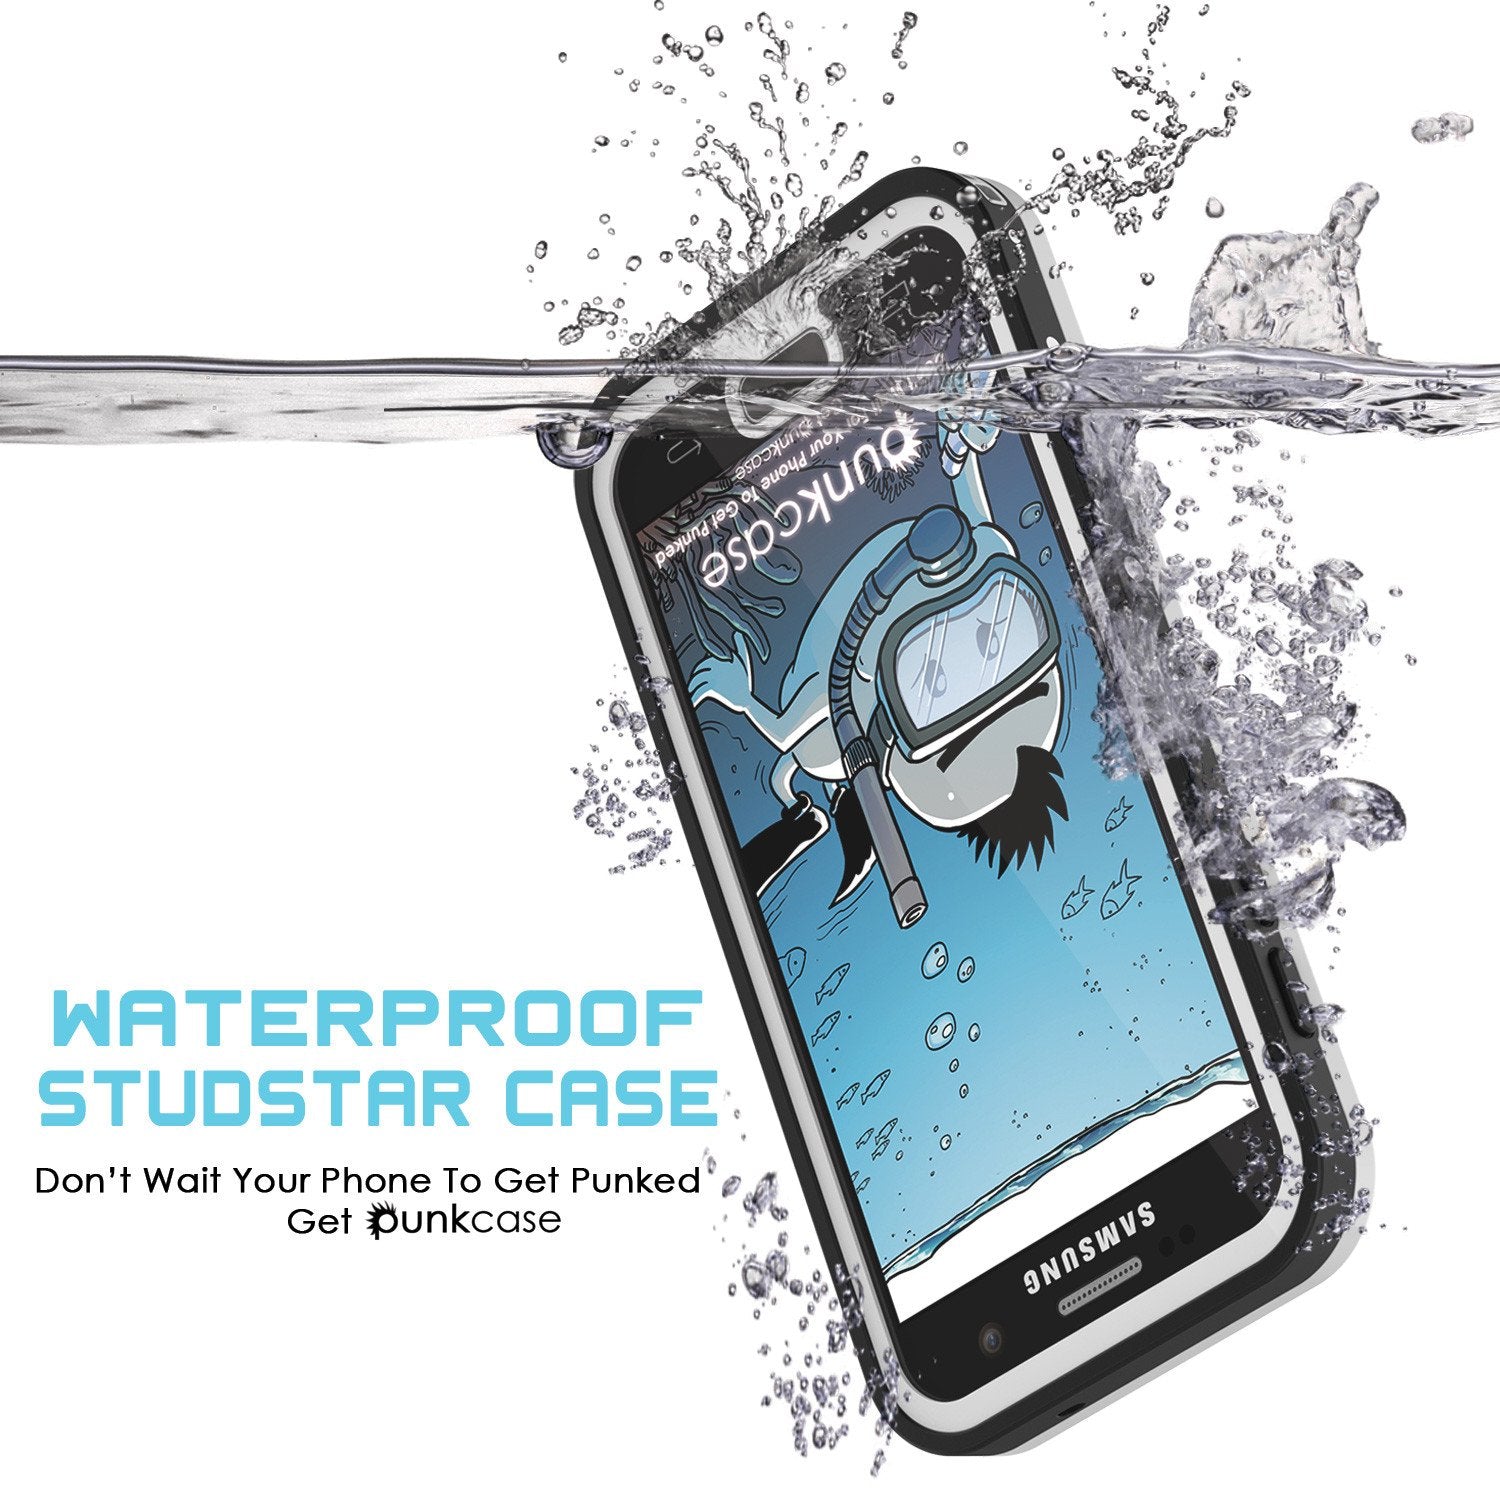 Galaxy S7 Waterproof Case, Punkcase StudStar White Thin 6.6ft Underwater IP68 Shock/Dirt/Snow Proof